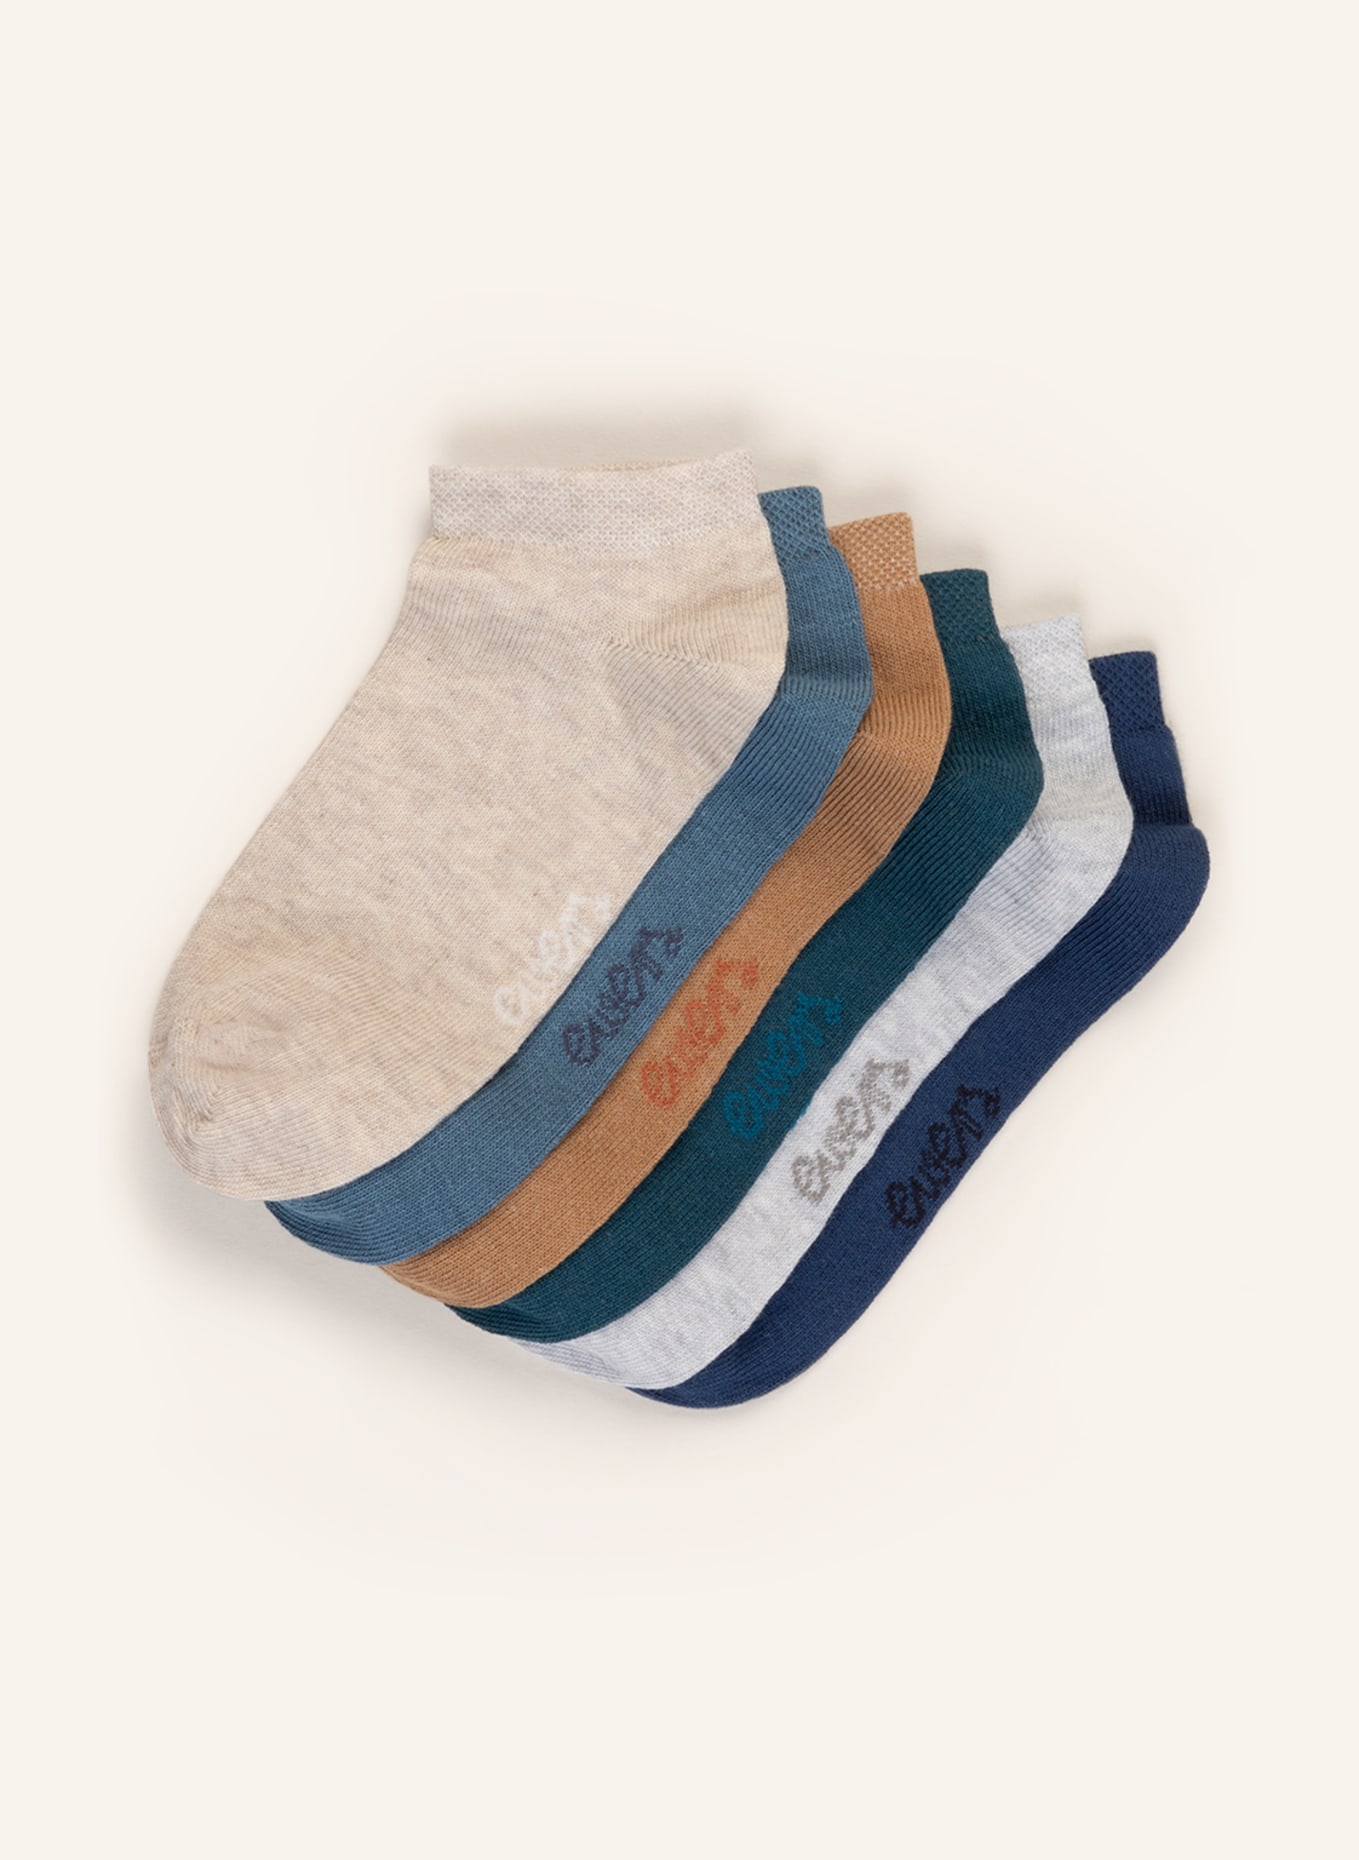 ewers COLLECTION 6er-Pack Socken, Farbe: 1 1 beige-blau-grau (Bild 1)